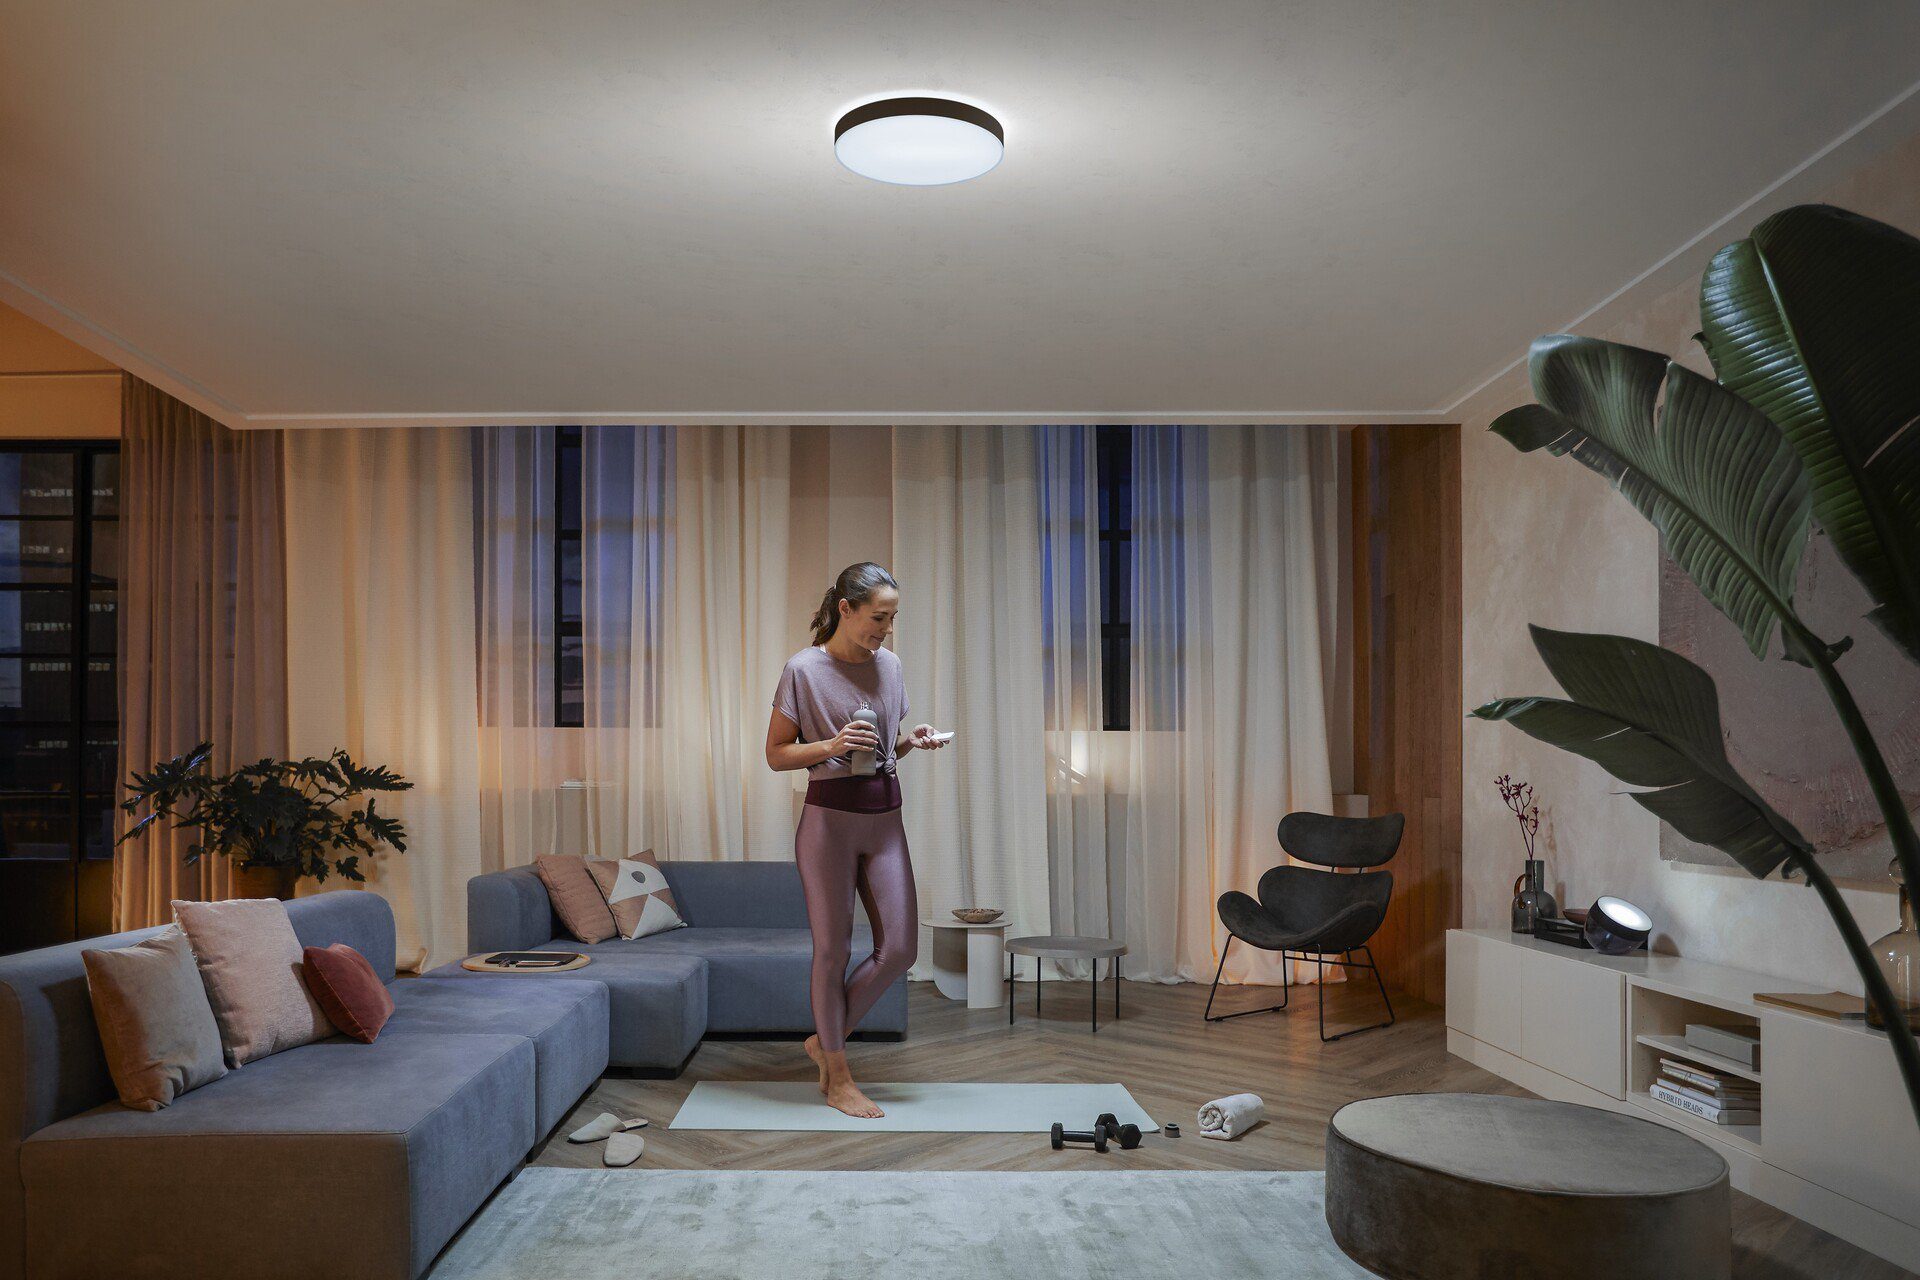 Enrave, Hue fest LED Philips Warmweiß Dimmfunktion, LED integriert, Deckenleuchte